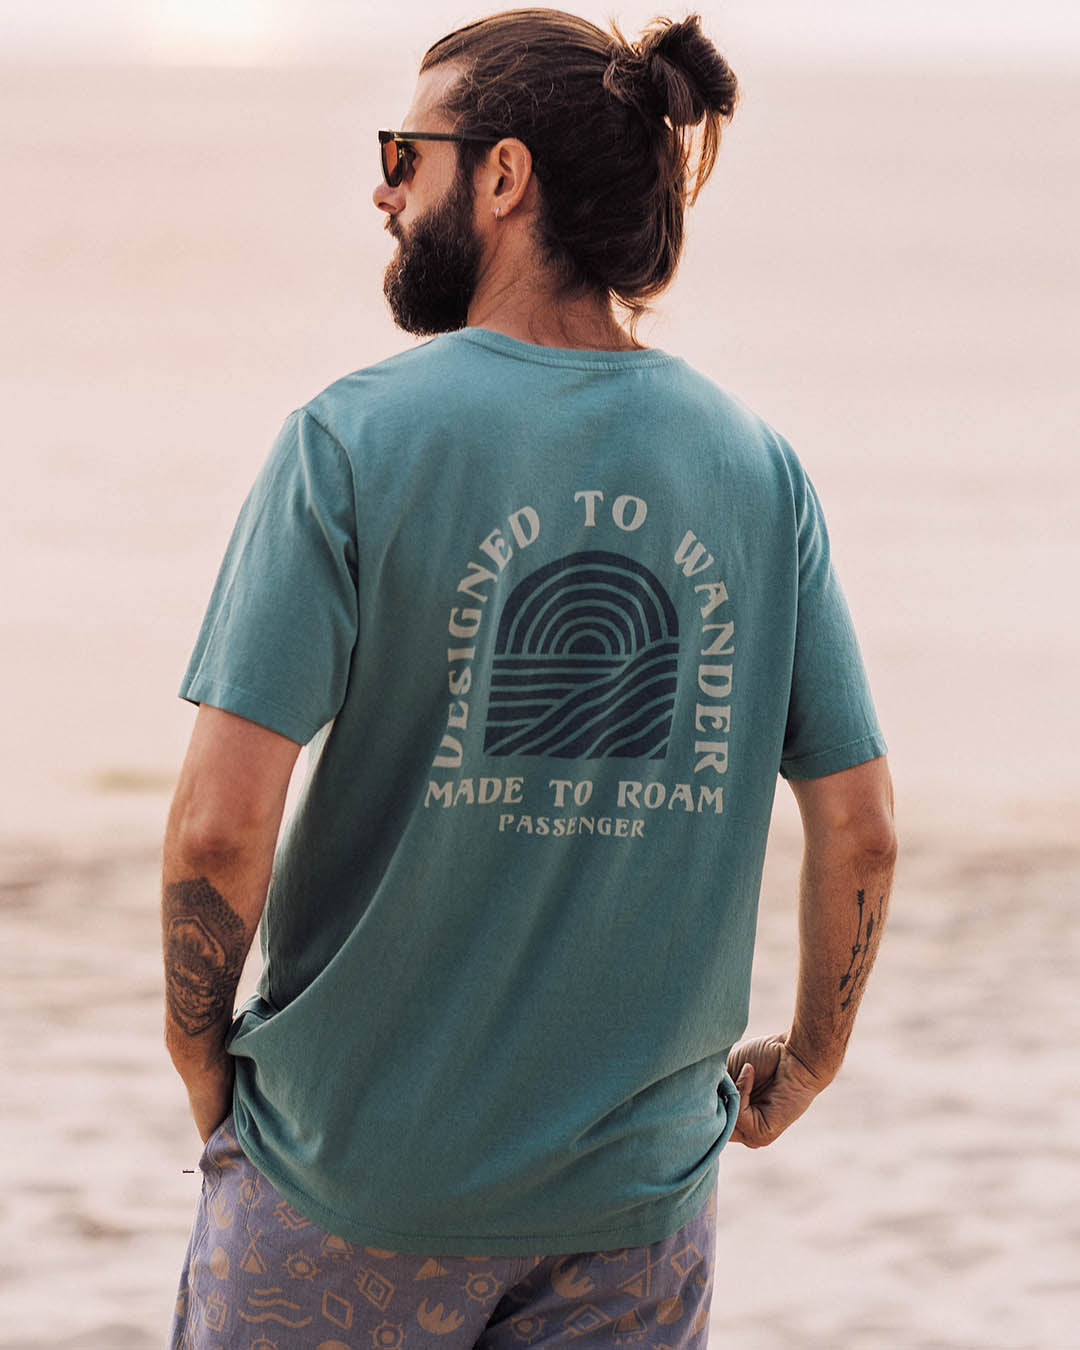 Sundown Recycled Cotton T-Shirt - Deep Sea